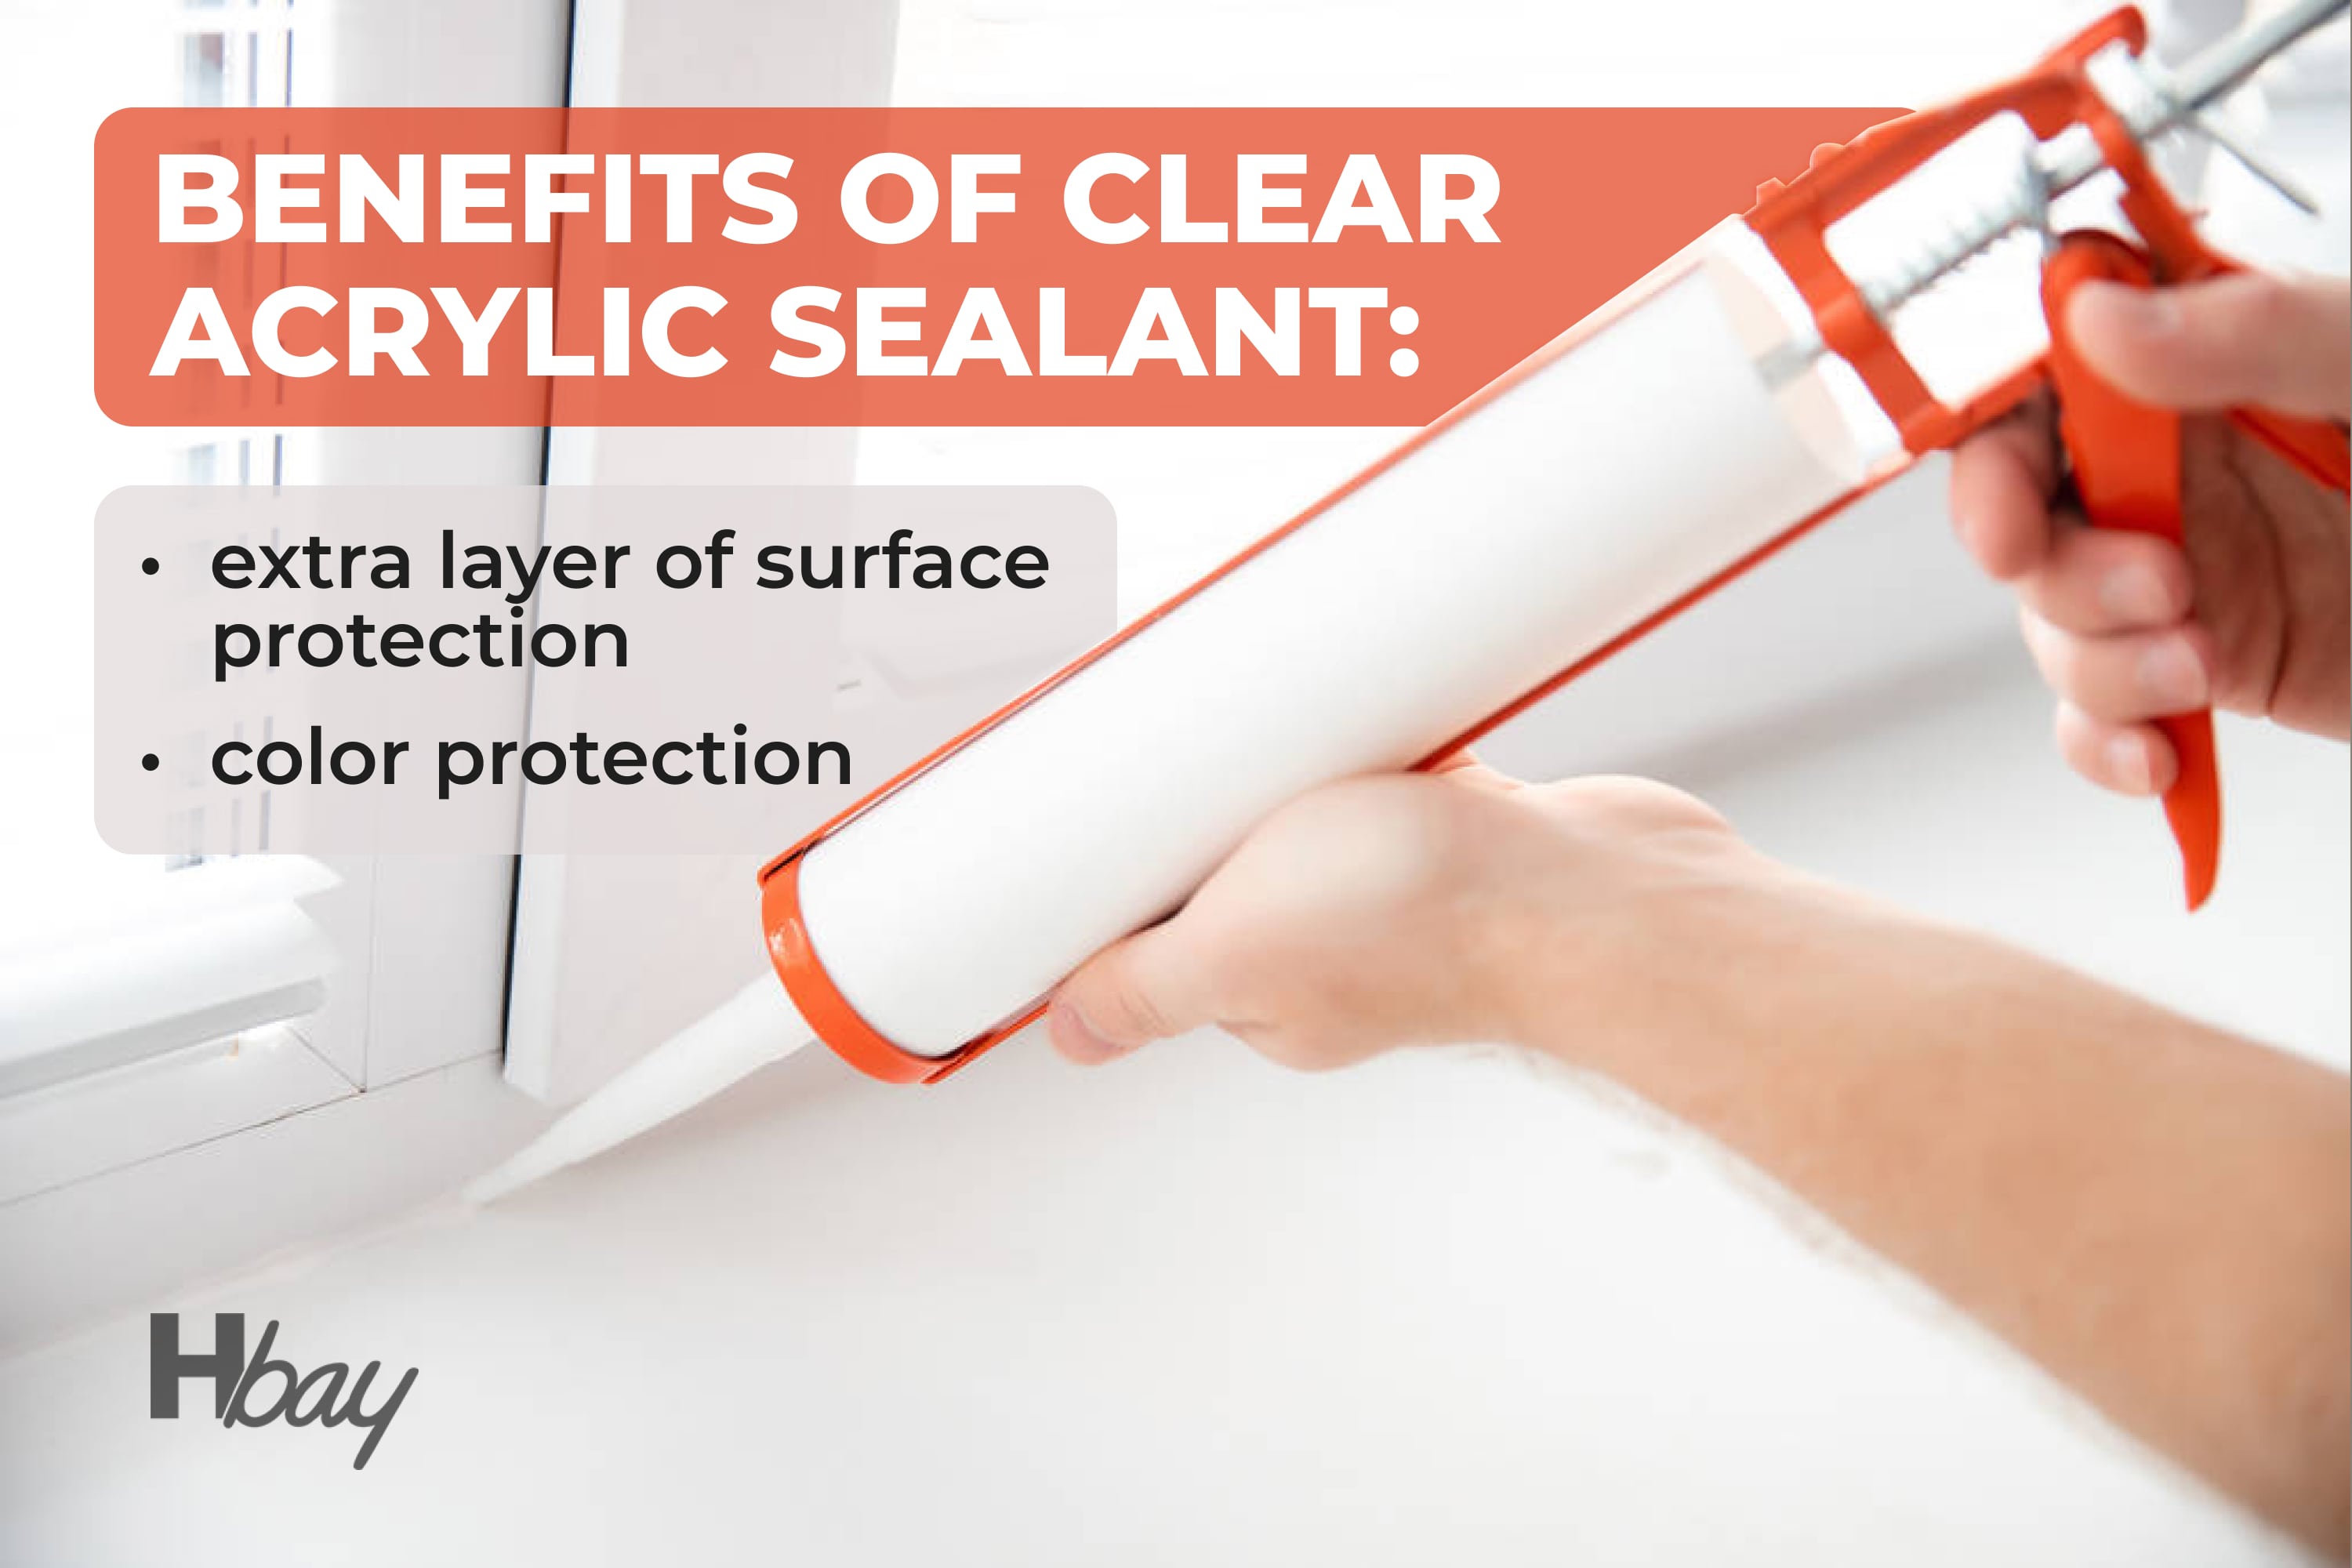 Benefits of Clear Acrylic Sealant